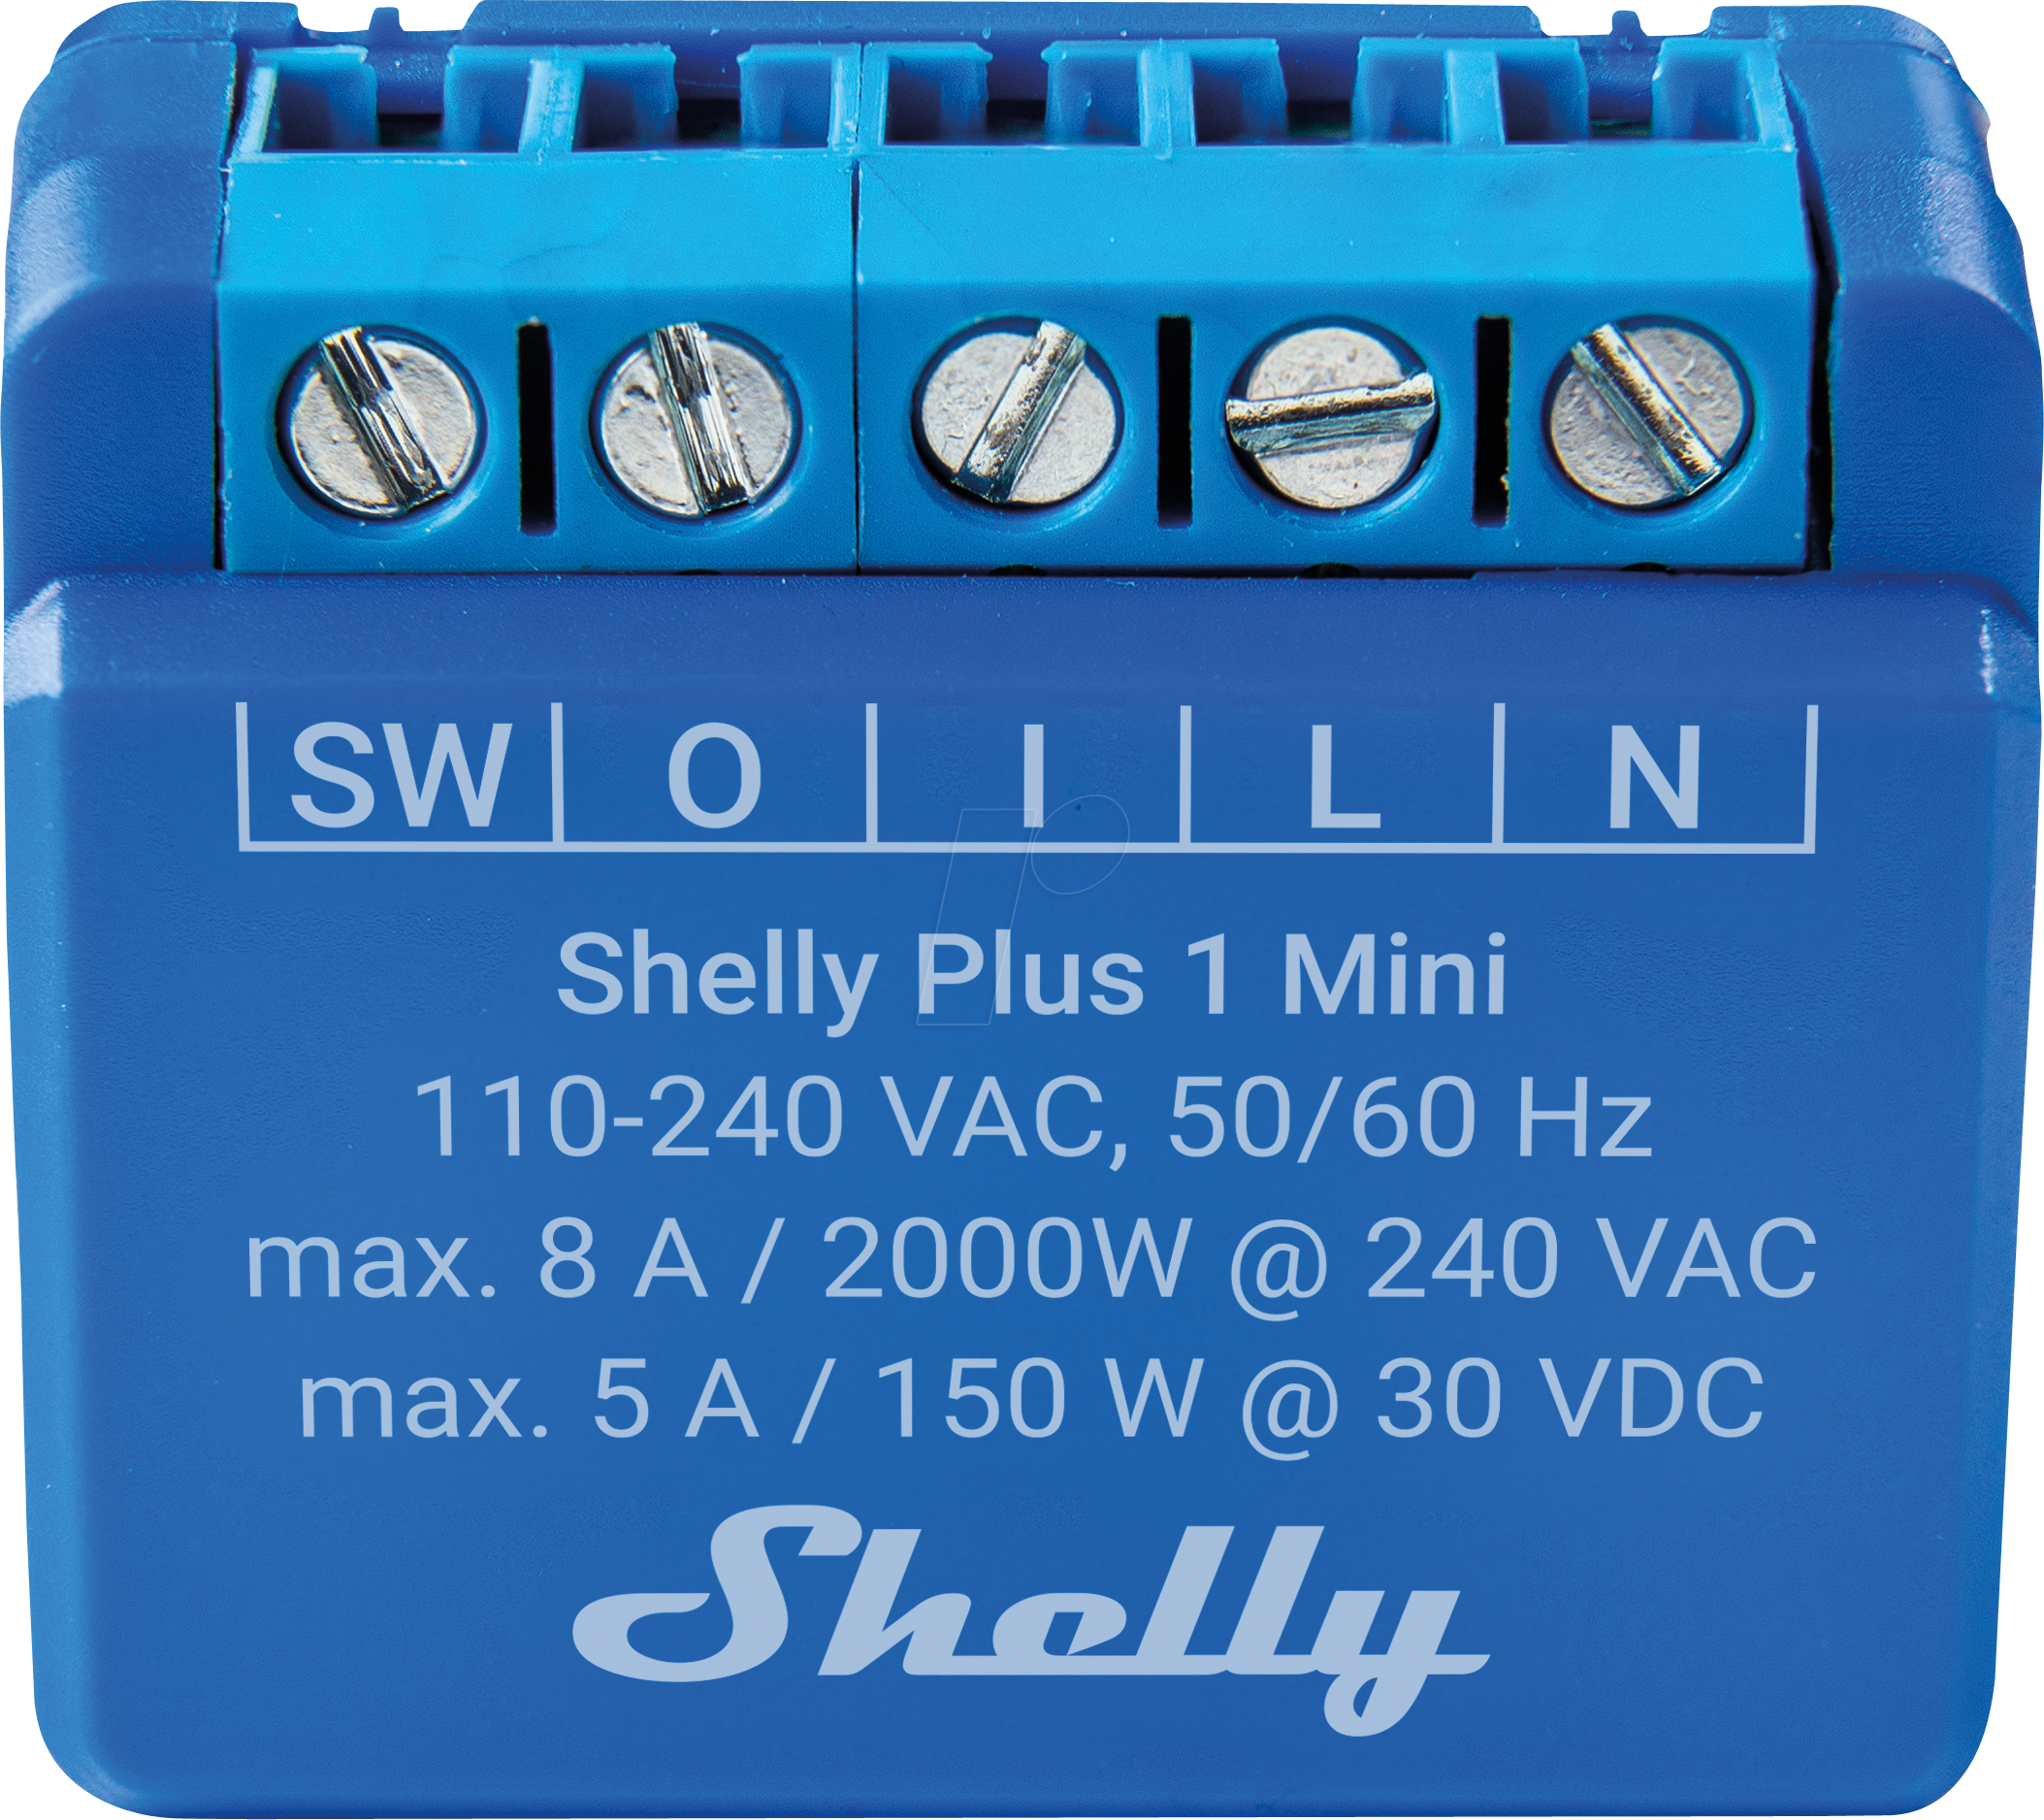 SHELLY PLUS 1M: Shelly Plus 1 Mini, 1 canale, WLAN, Bluetooth, max. 8 A da  reichelt elektronik